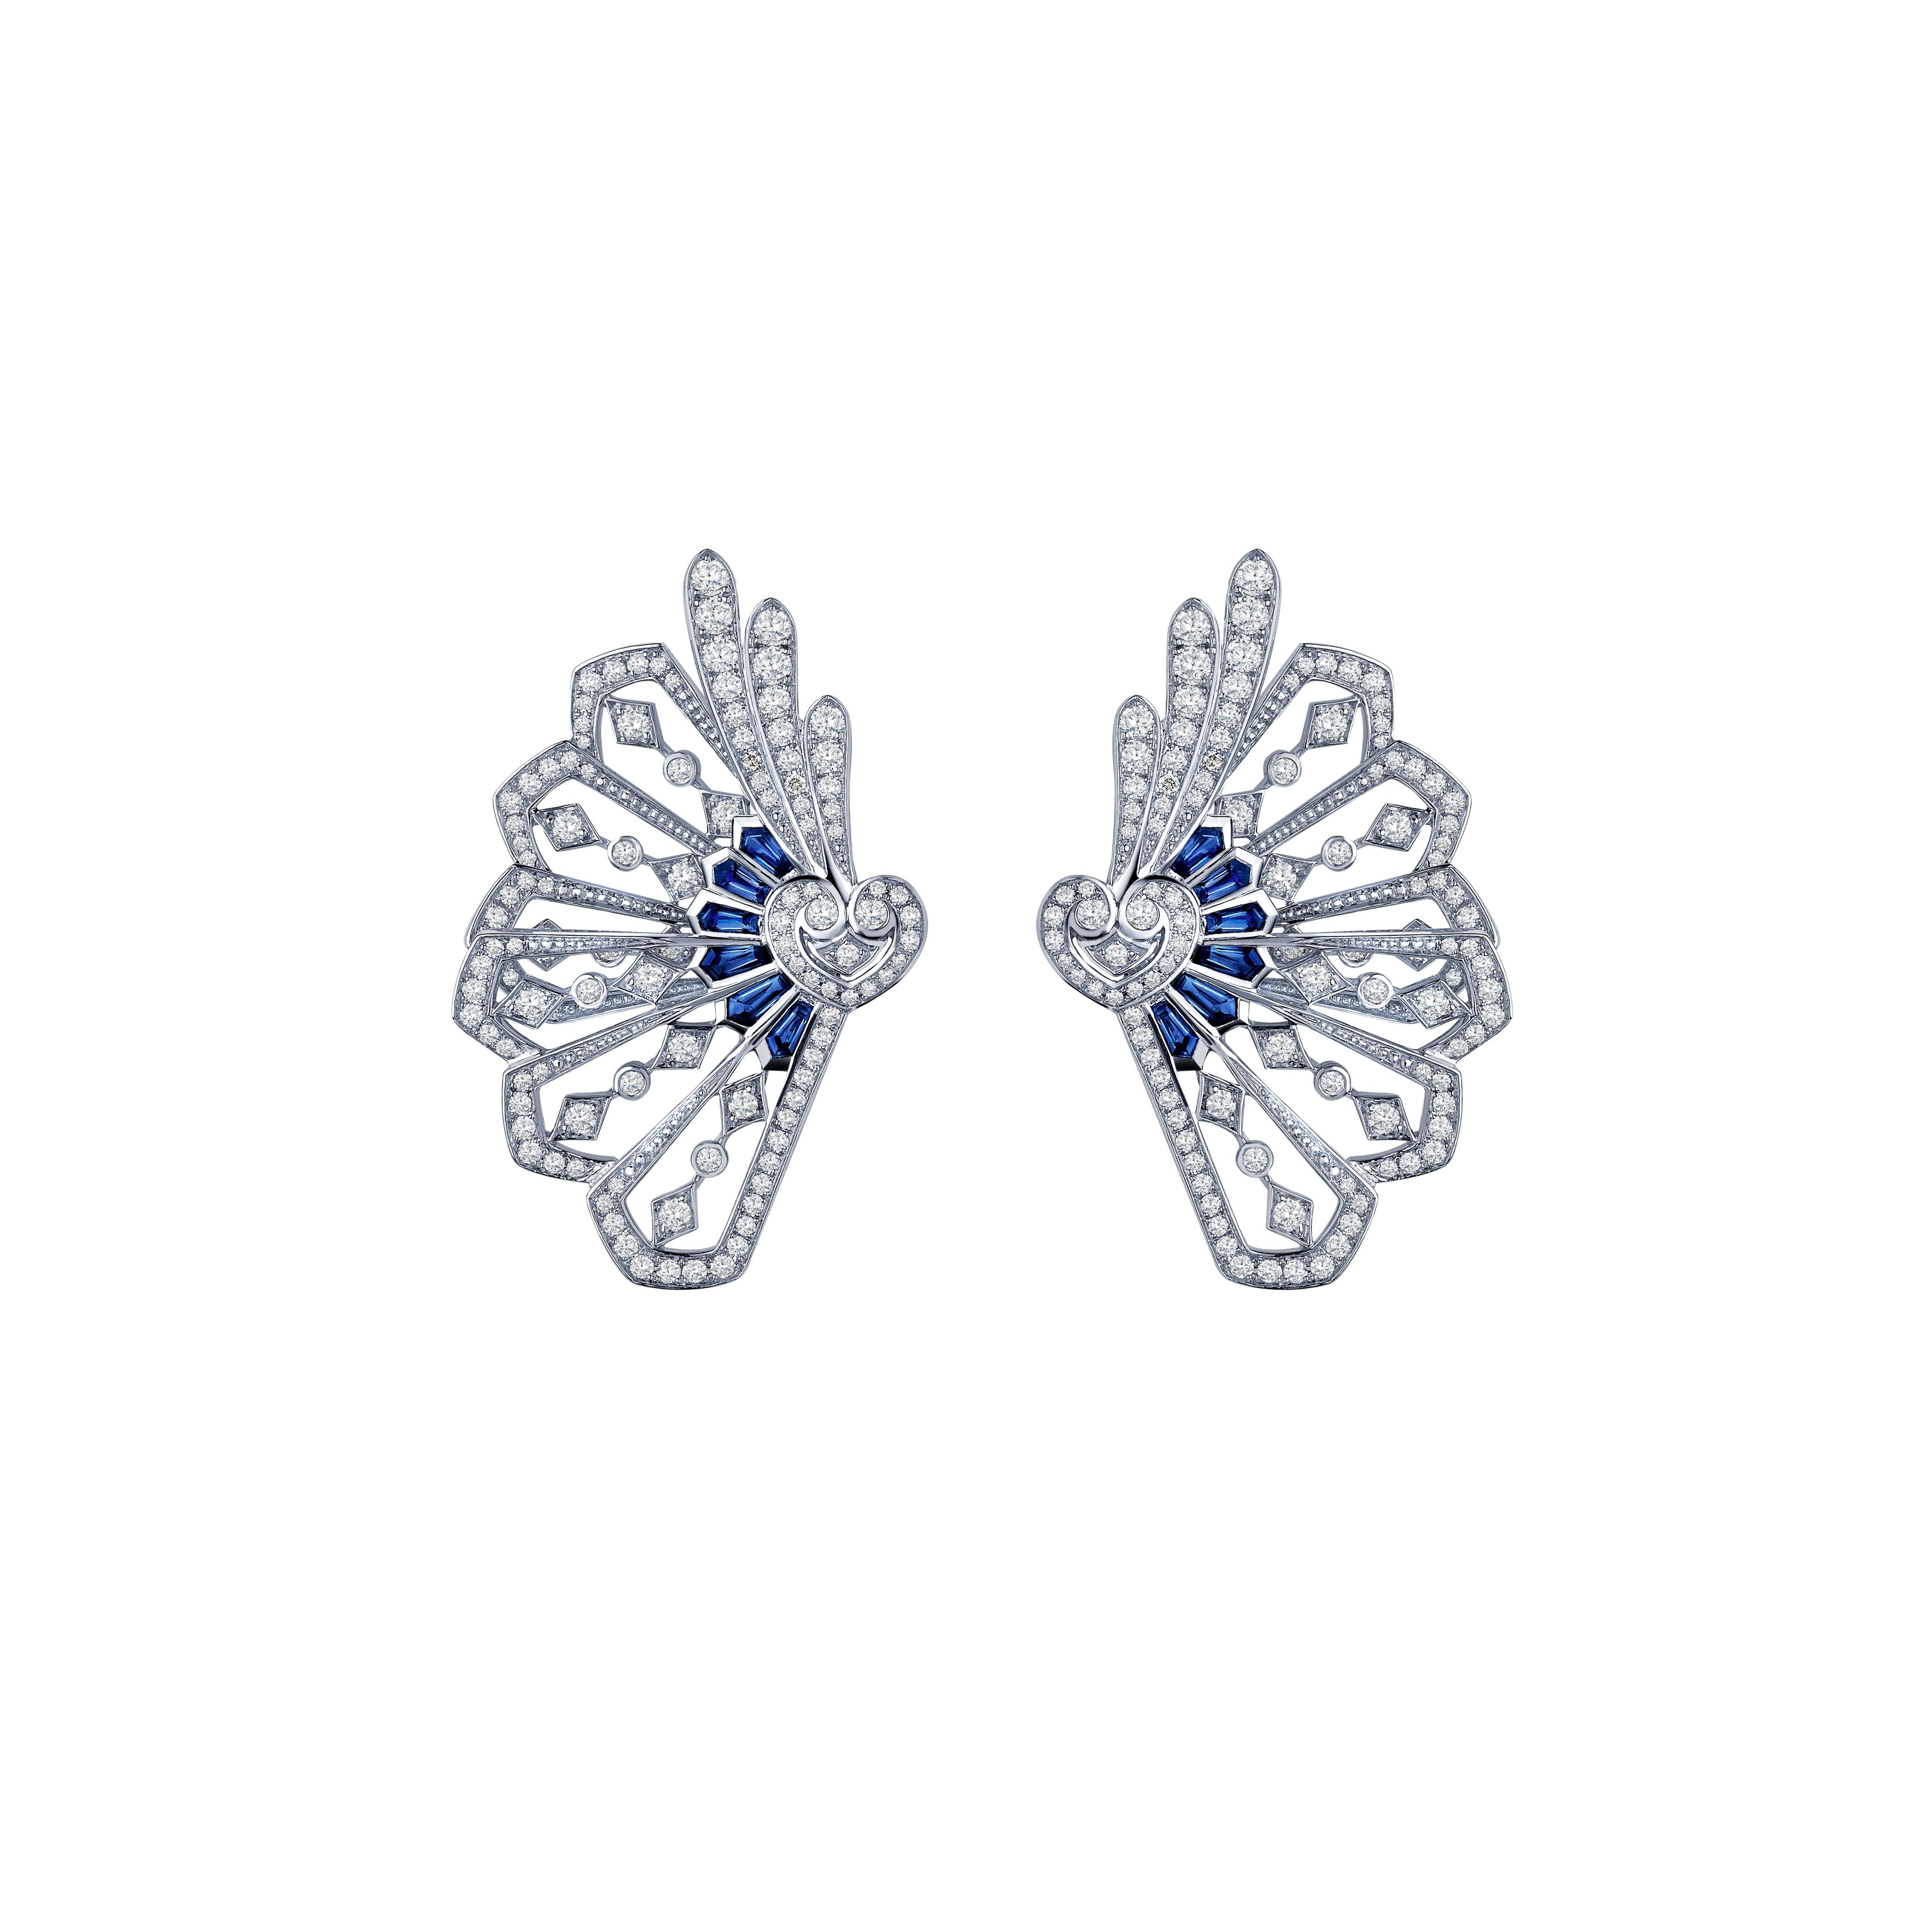 Garrard 'Fanfare' White Diamond and Calibre Cut Blue Sapphire Earring Climbers